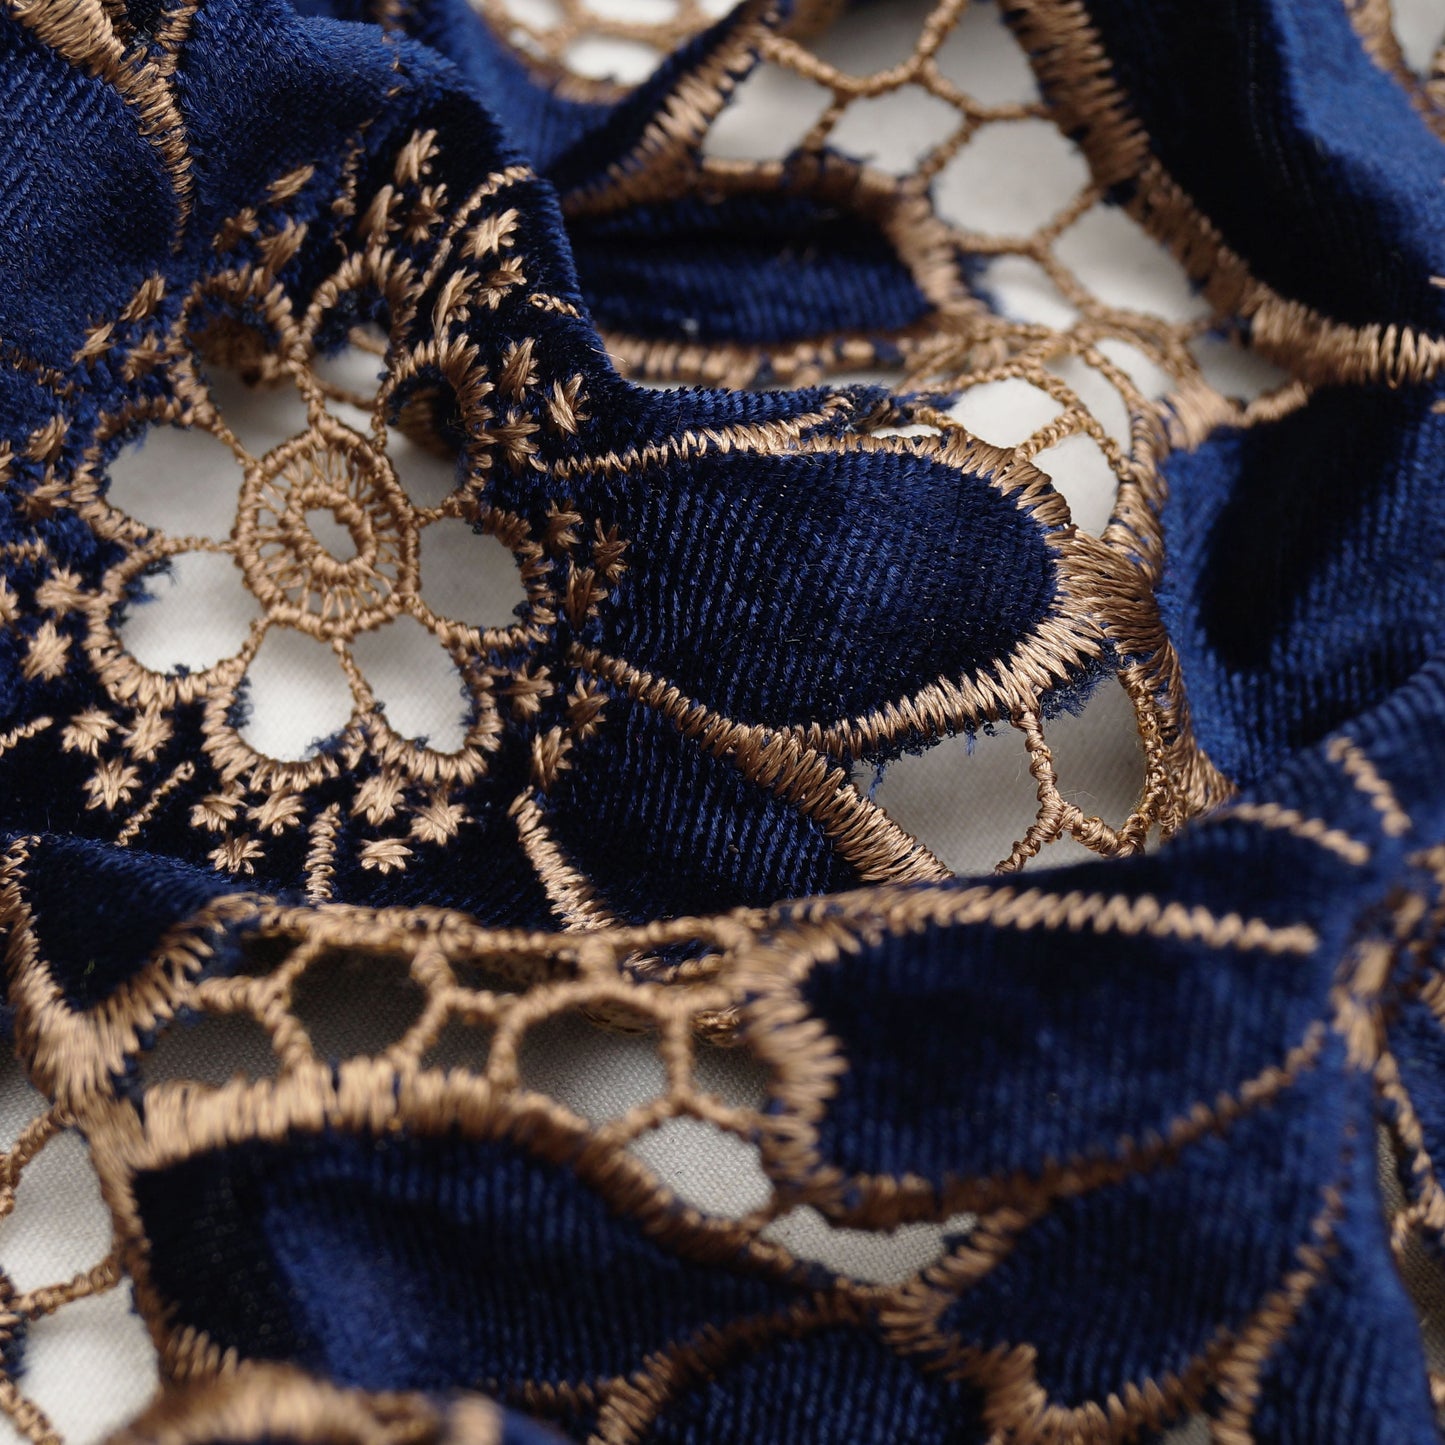 Velvet Embroidery Fabric